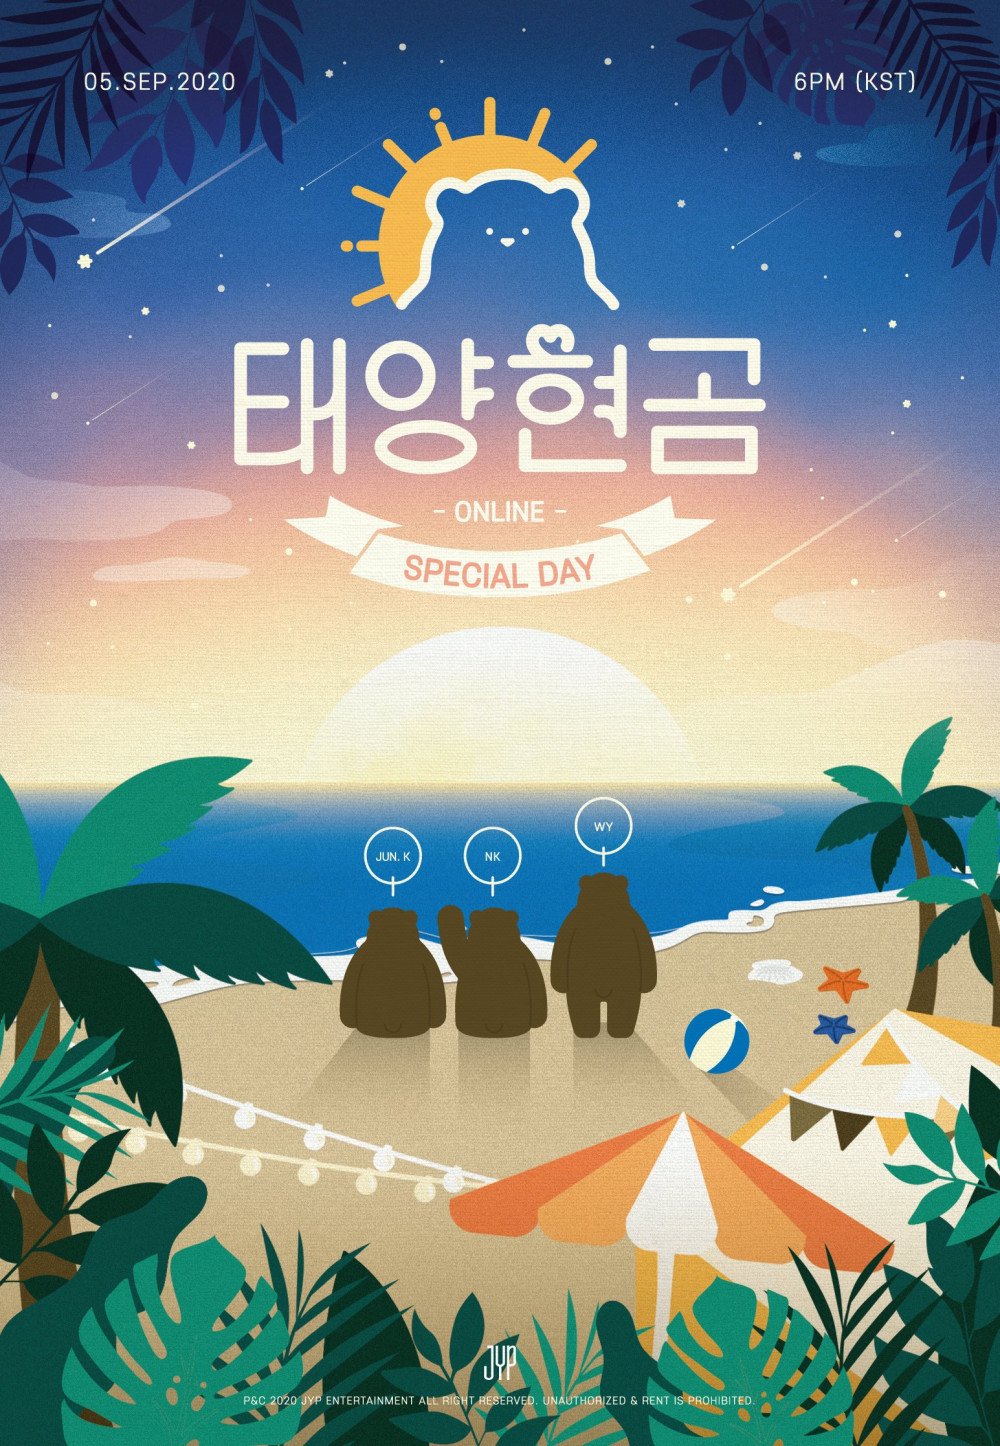 Jun.K, Никкун и Уён из 2PM опубликовали постер к предстоящему онлайн-ивенту